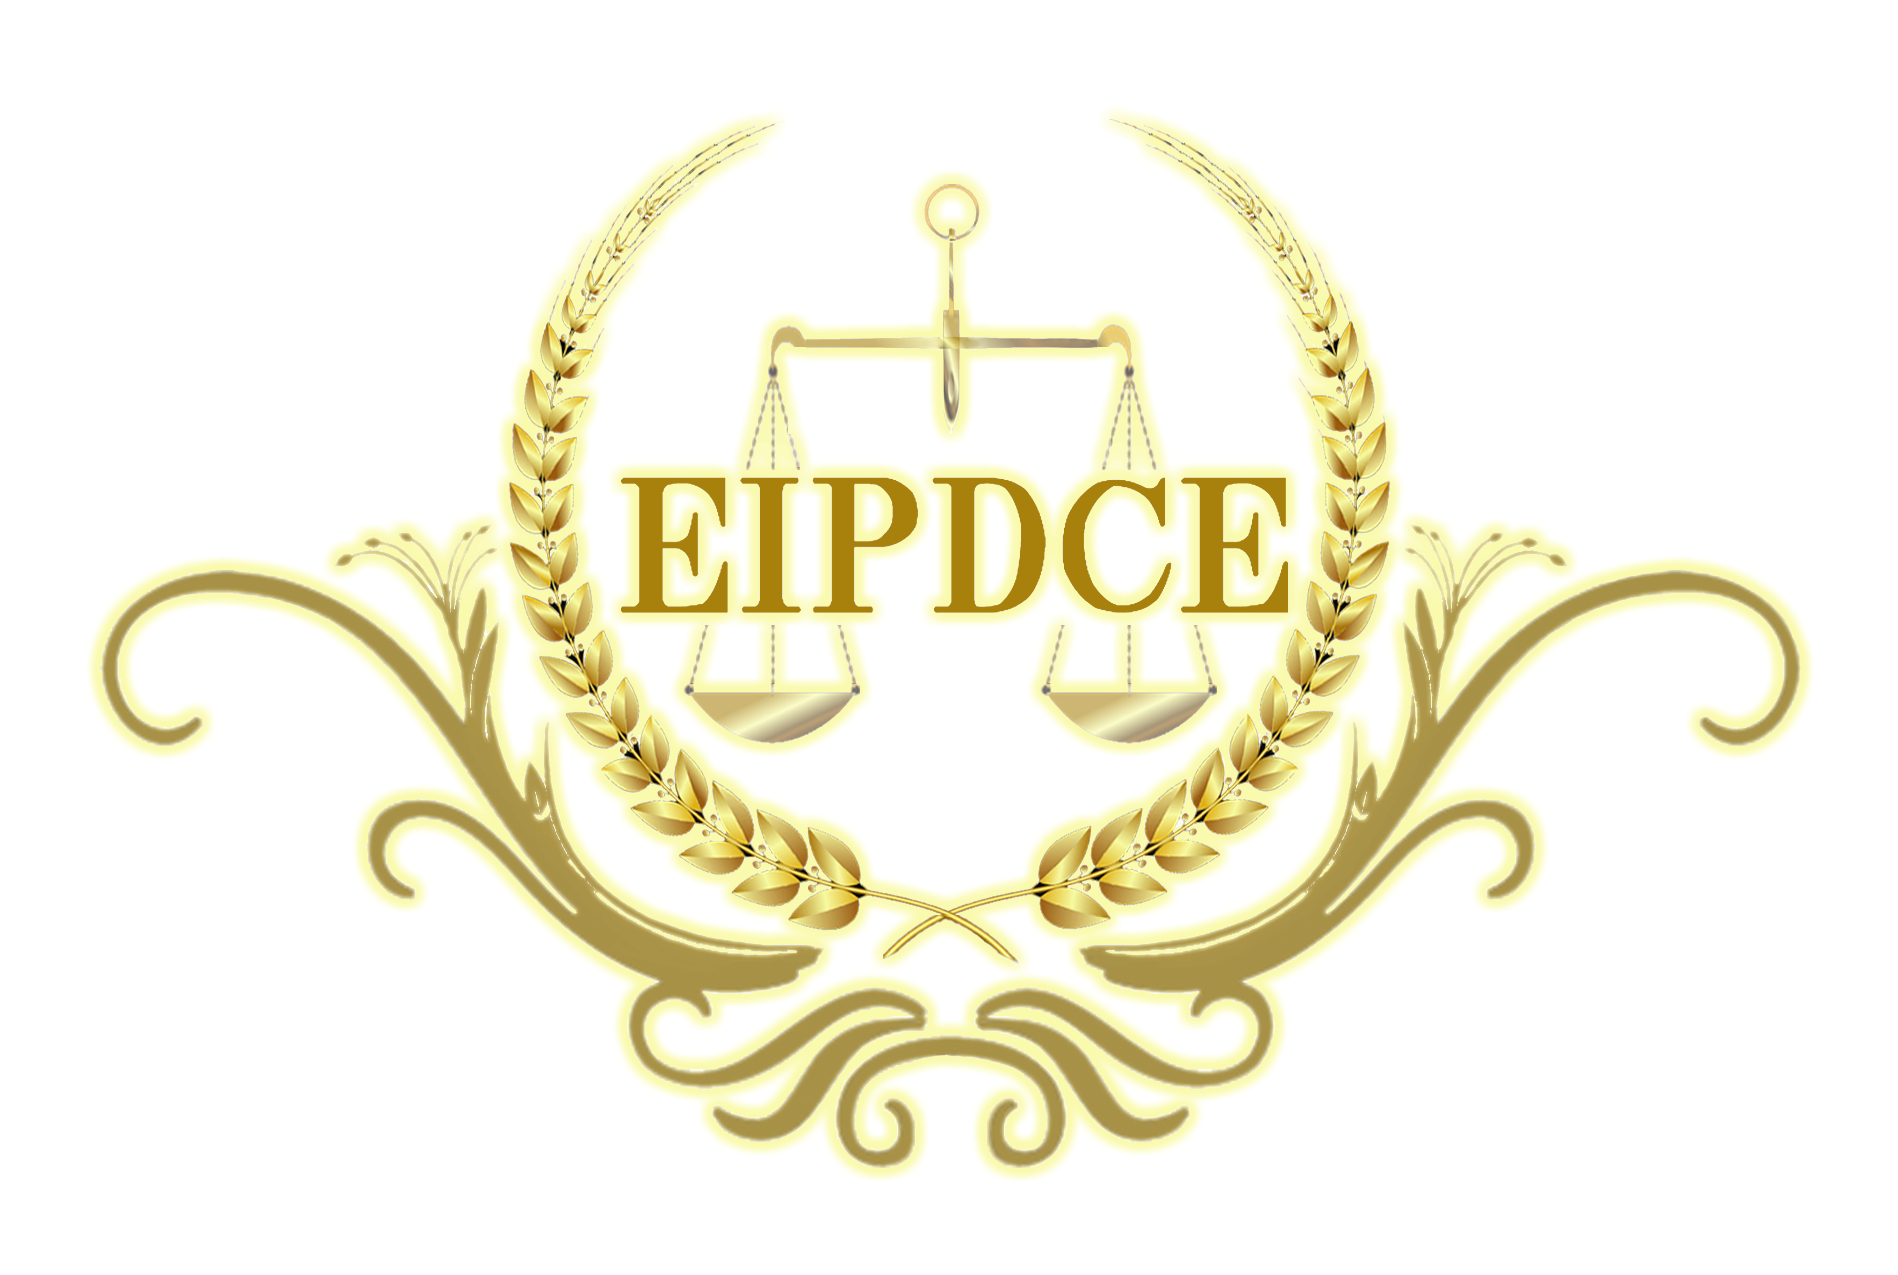 Logo of EIPDCE